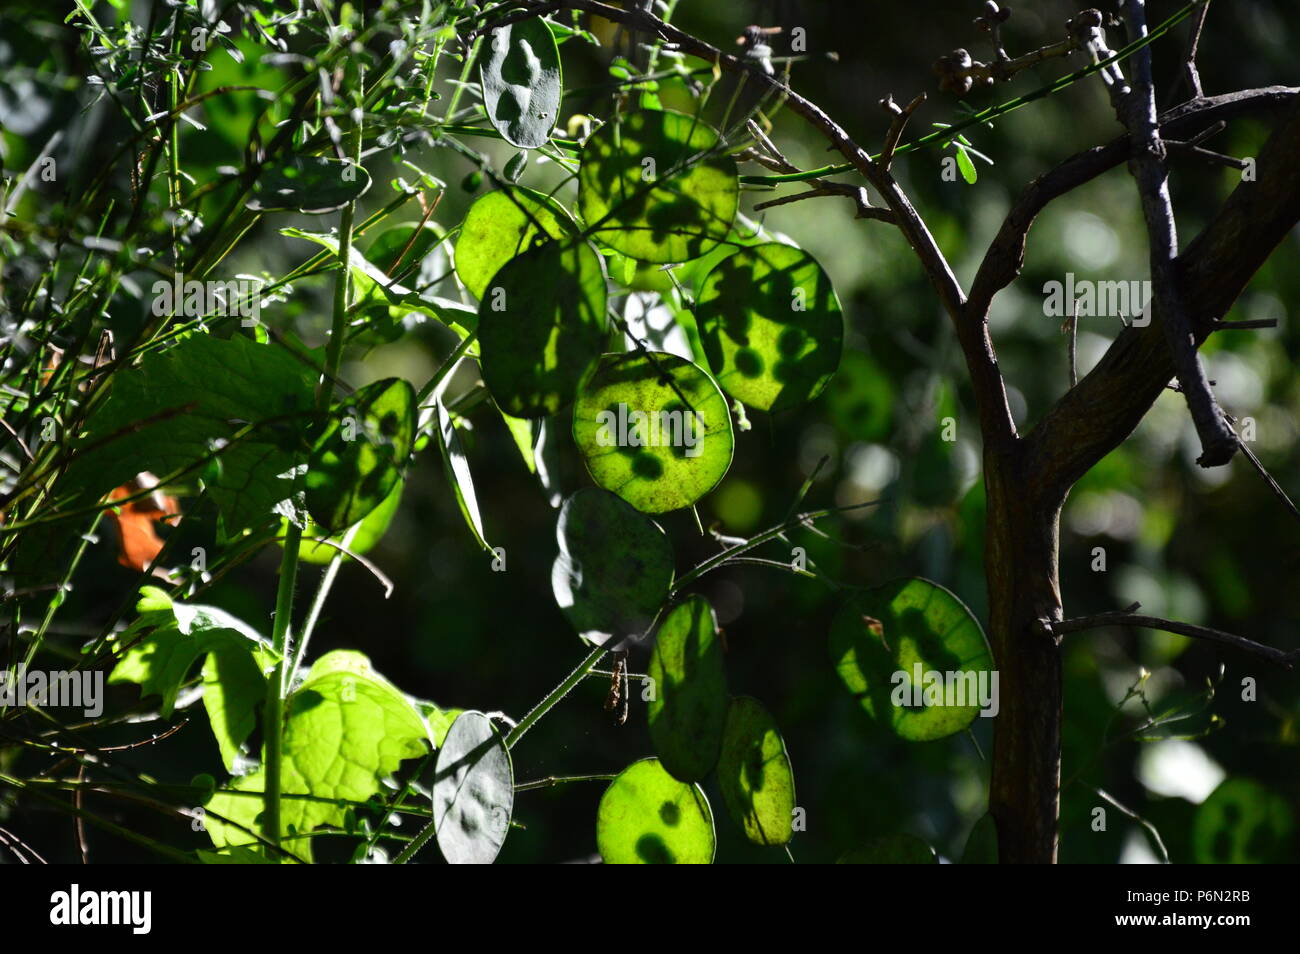 Zoom on a green Lunaria plante in the garden Stock Photo